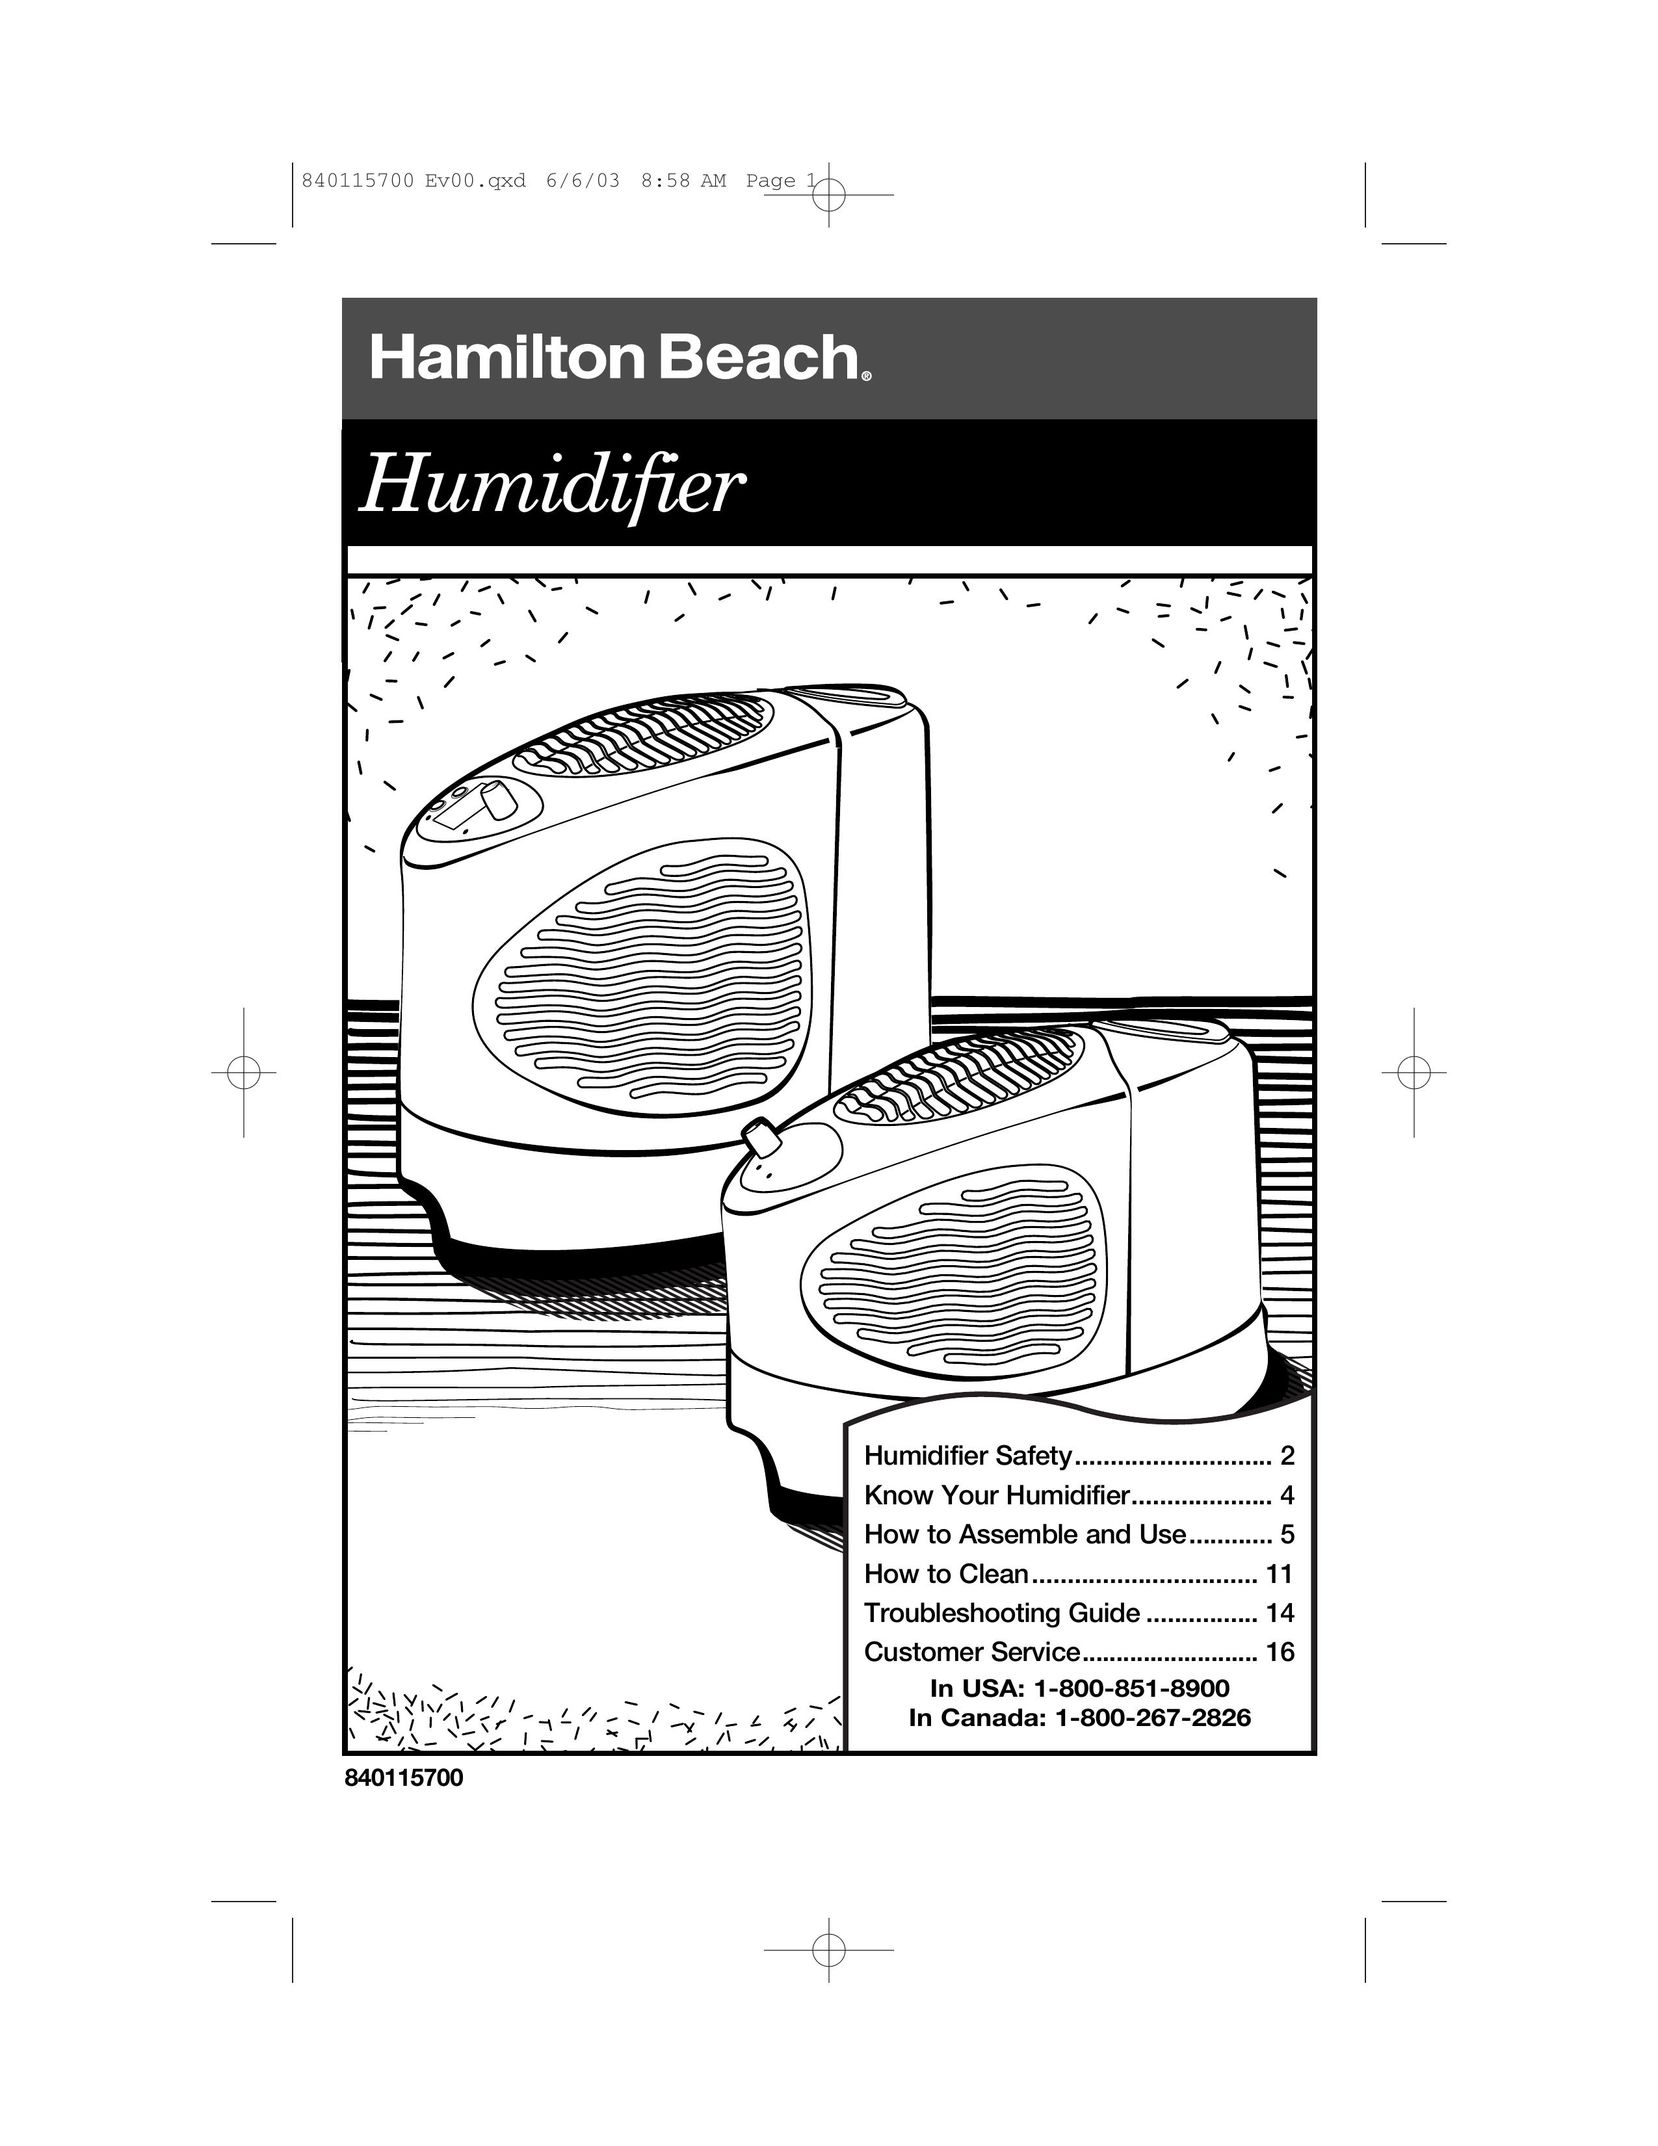 Hamilton Beach 05518C Humidifier User Manual